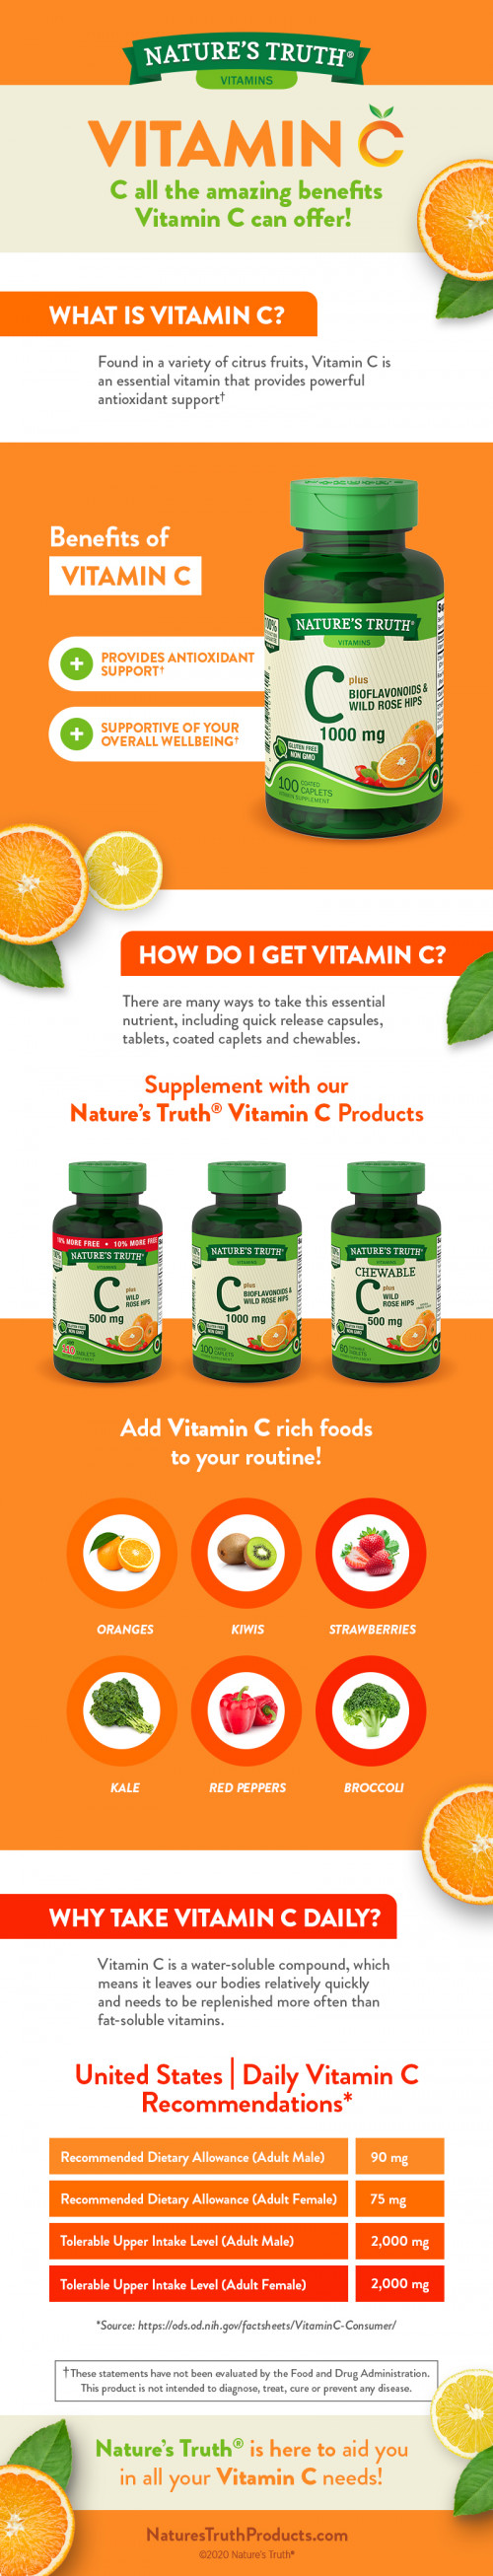 Benefits-of-Vitamin-C.jpg